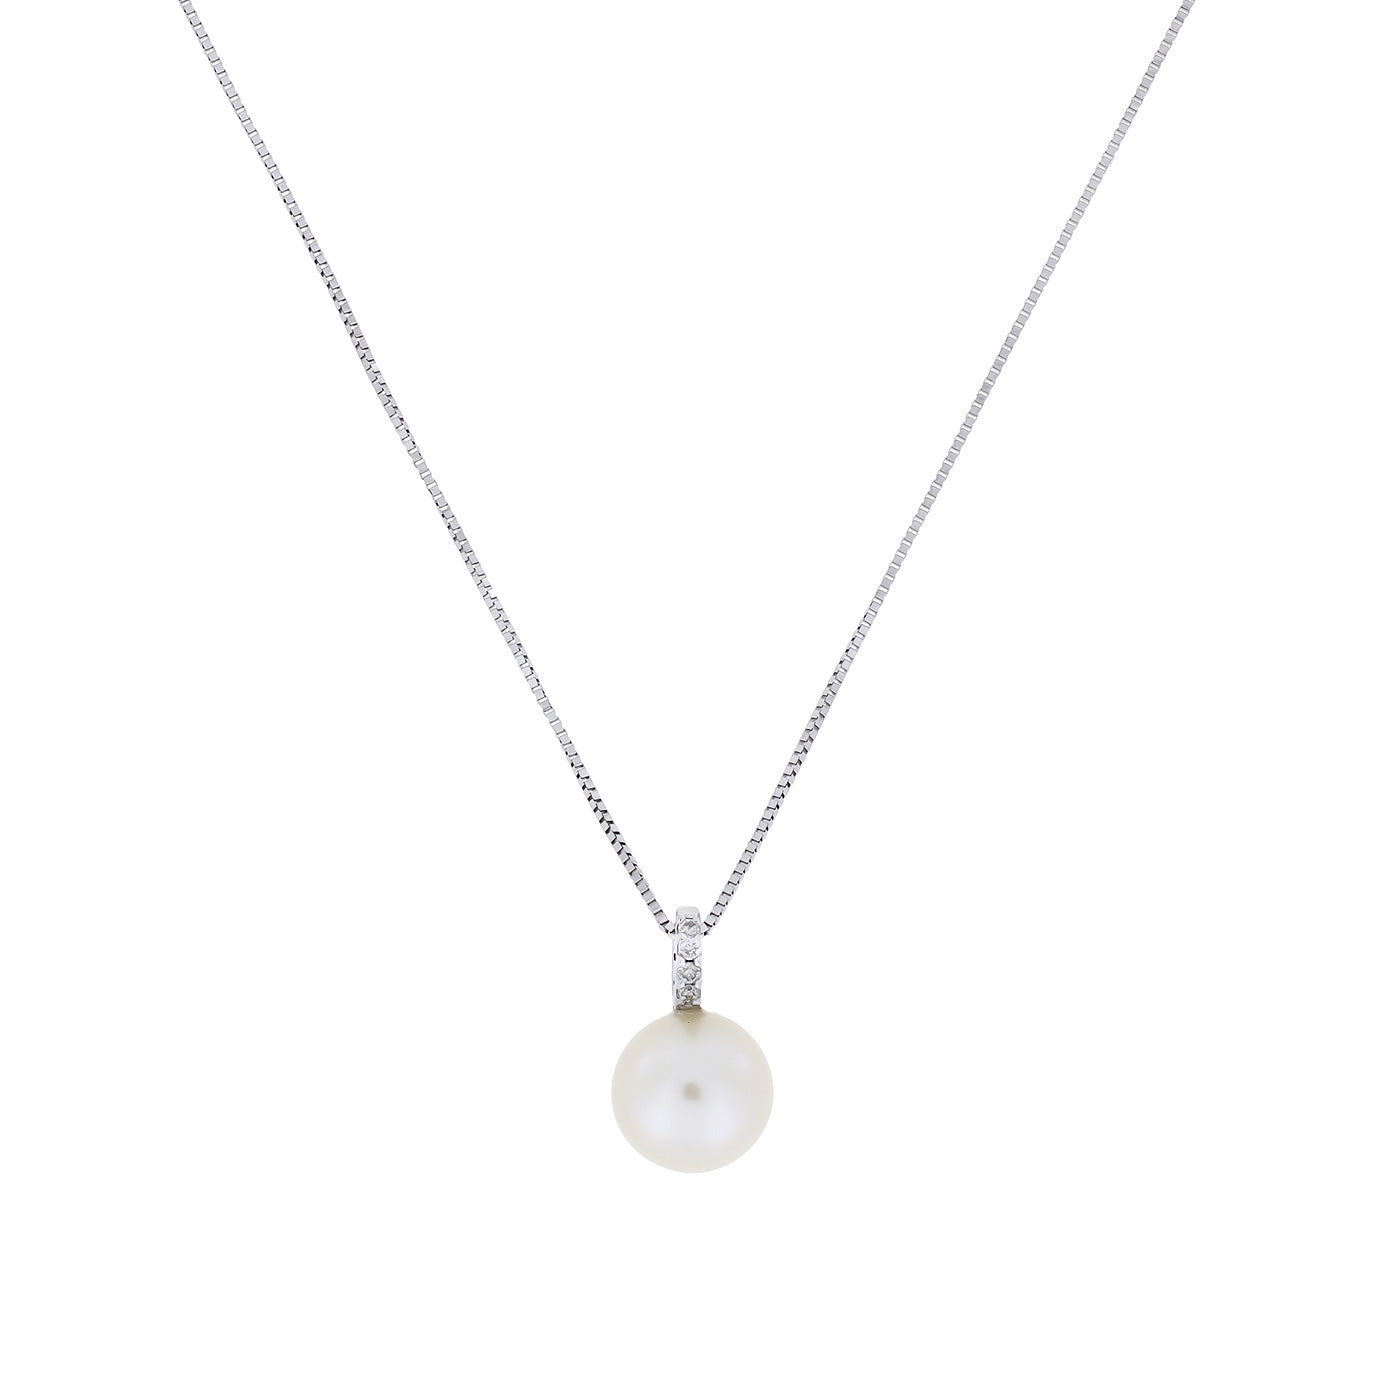 9 Carat White Gold, Pearl and Diamond Pendant